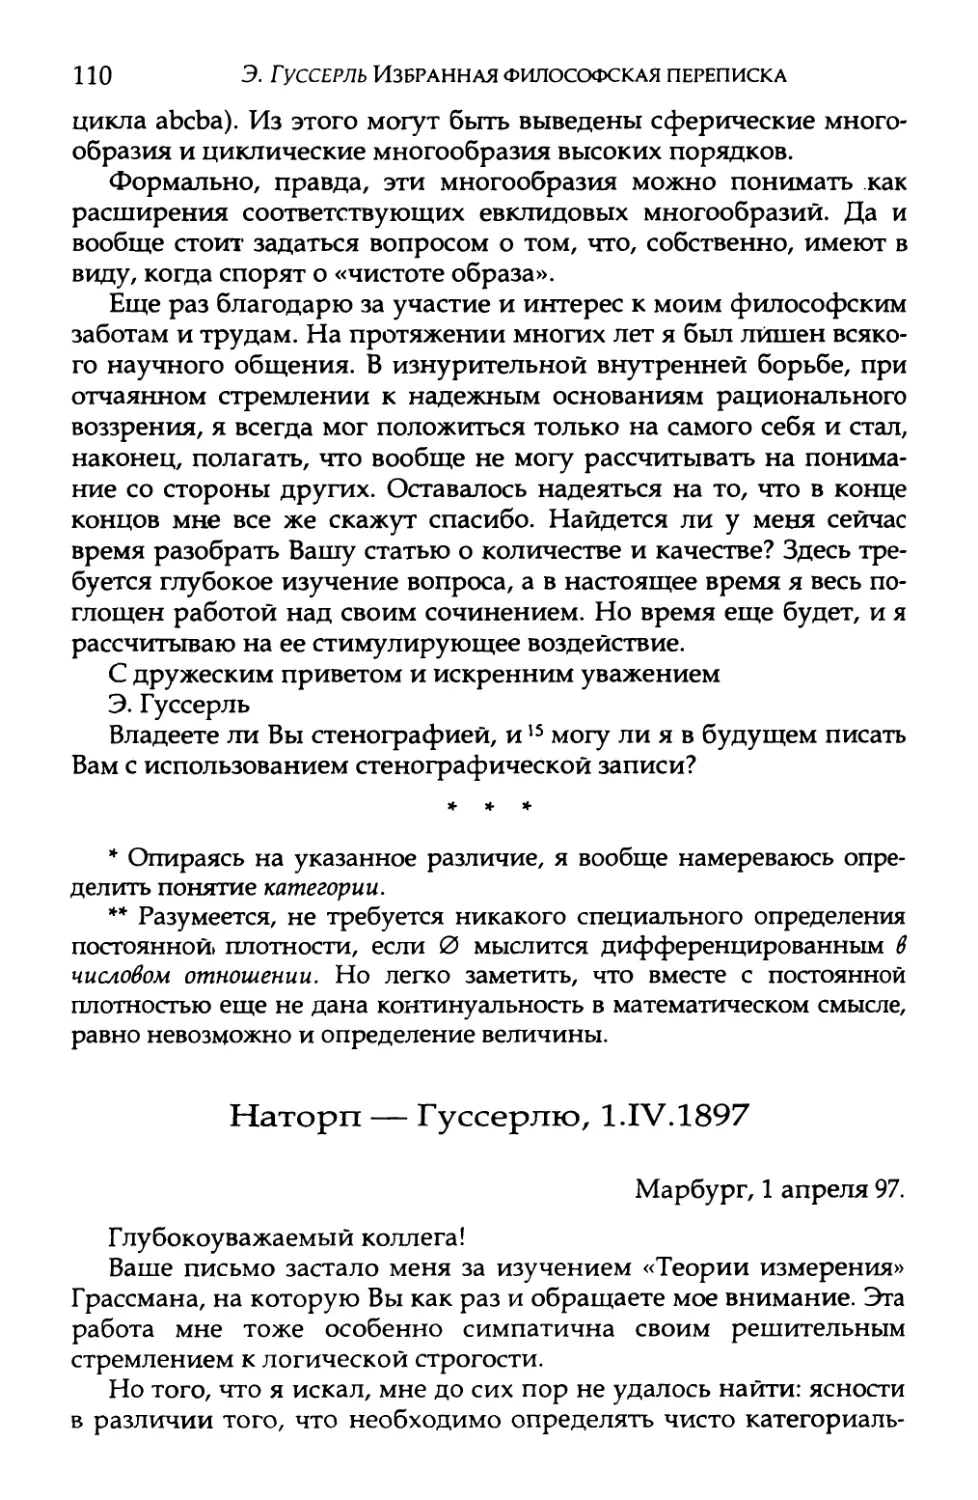 Наторп — Гуссерлю, 1.IV.1897